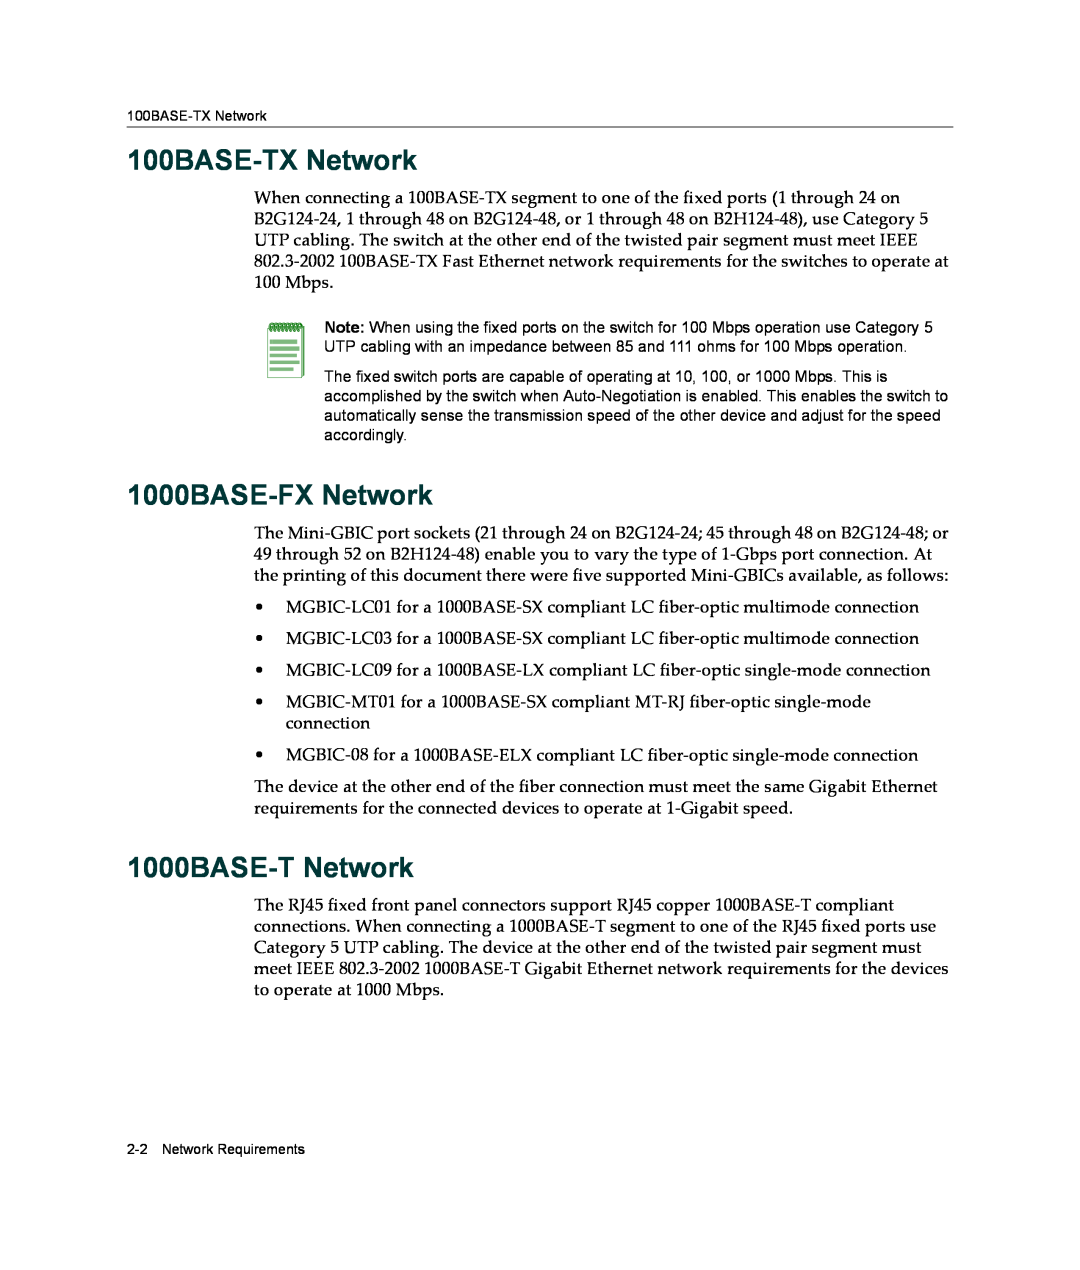 Enterasys Networks B2G124-24 manual 100BASE-TX Network, 1000BASE-FX Network, 1000BASE-T Network, Network Requirements 